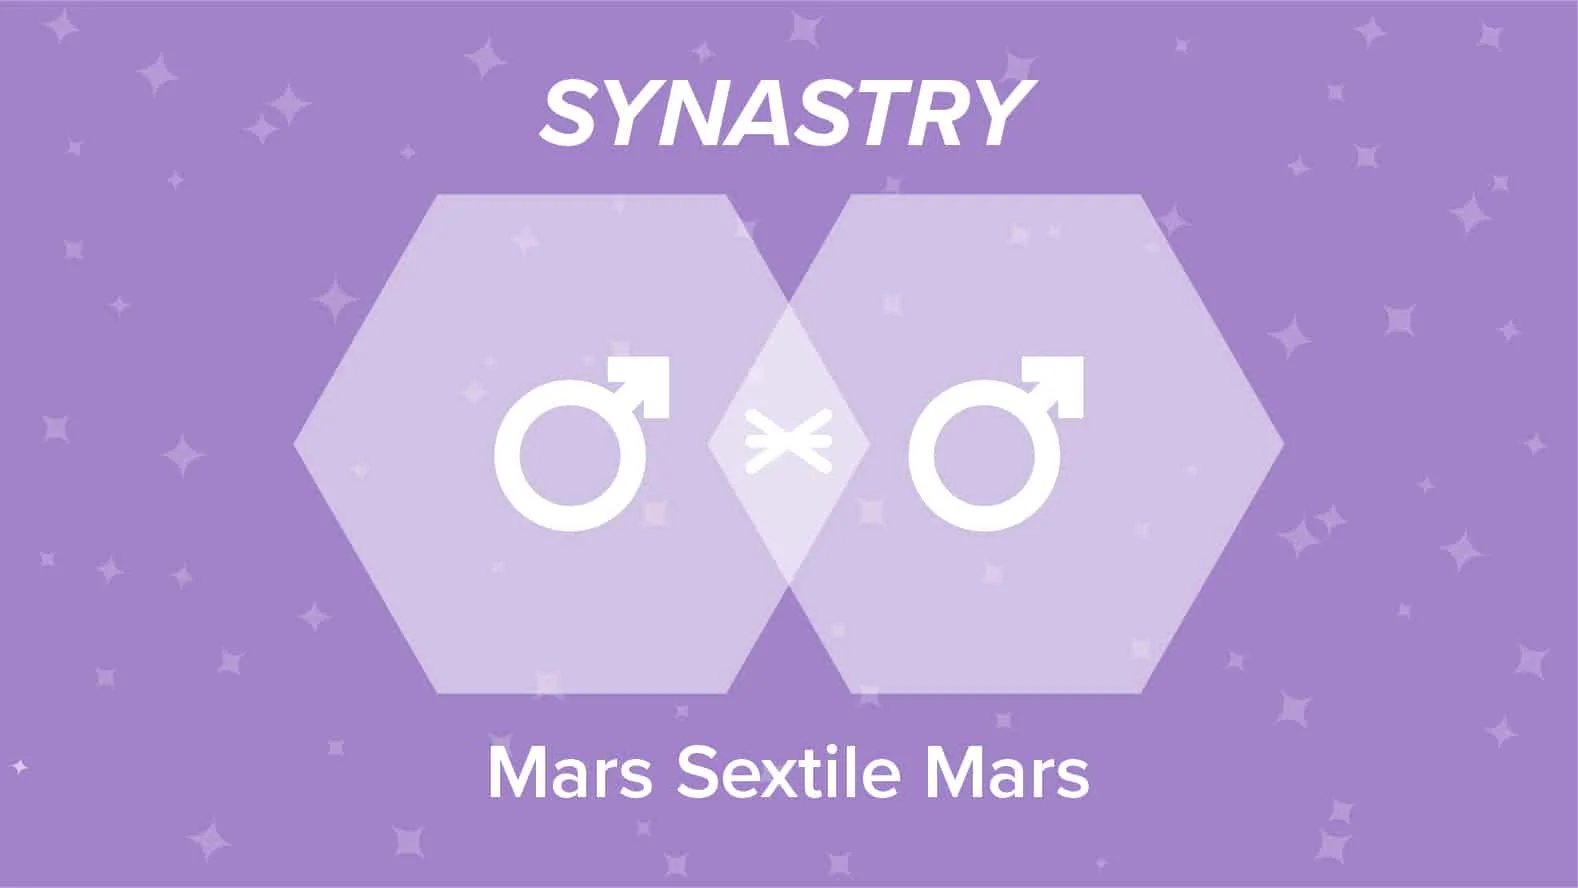 Mars Sextile Mars Synastry